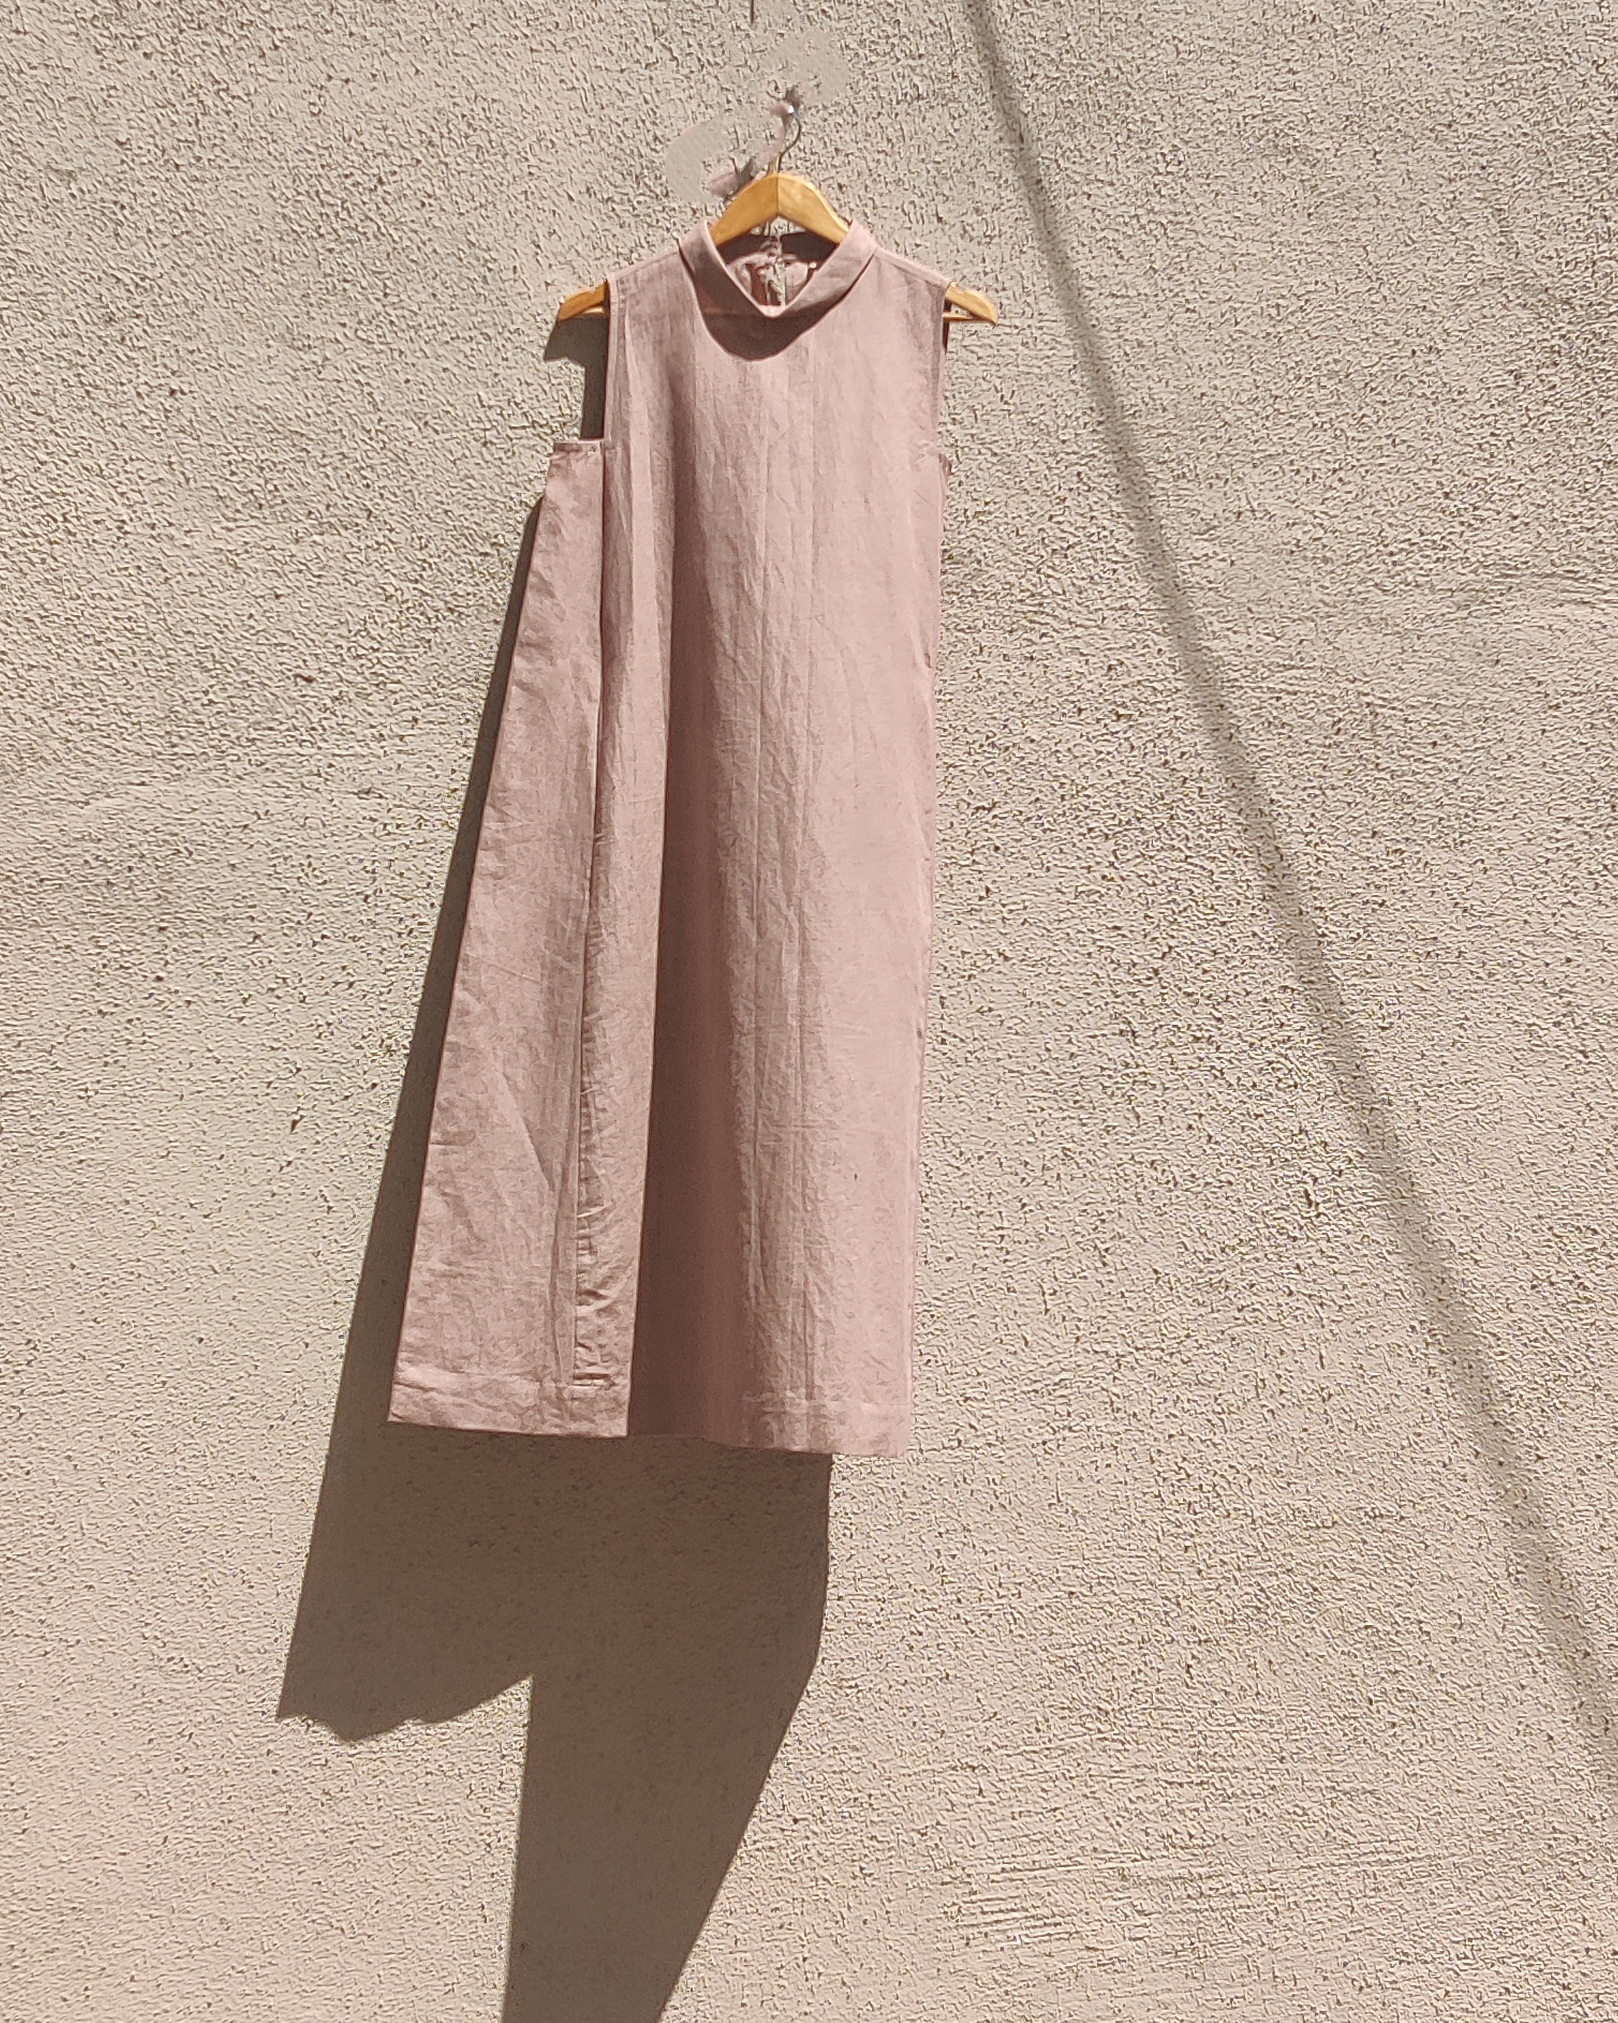 Sunset Rose A Line Dress at Kamakhyaa by Anushé Pirani. This item is Beige, Casual Wear, Cotton, Cotton Hemp, Handwoven, Hemp, Midi Dresses, Regular Fit, Shibumi Collection, Sleeveless Dresses, Solids, Womenswear